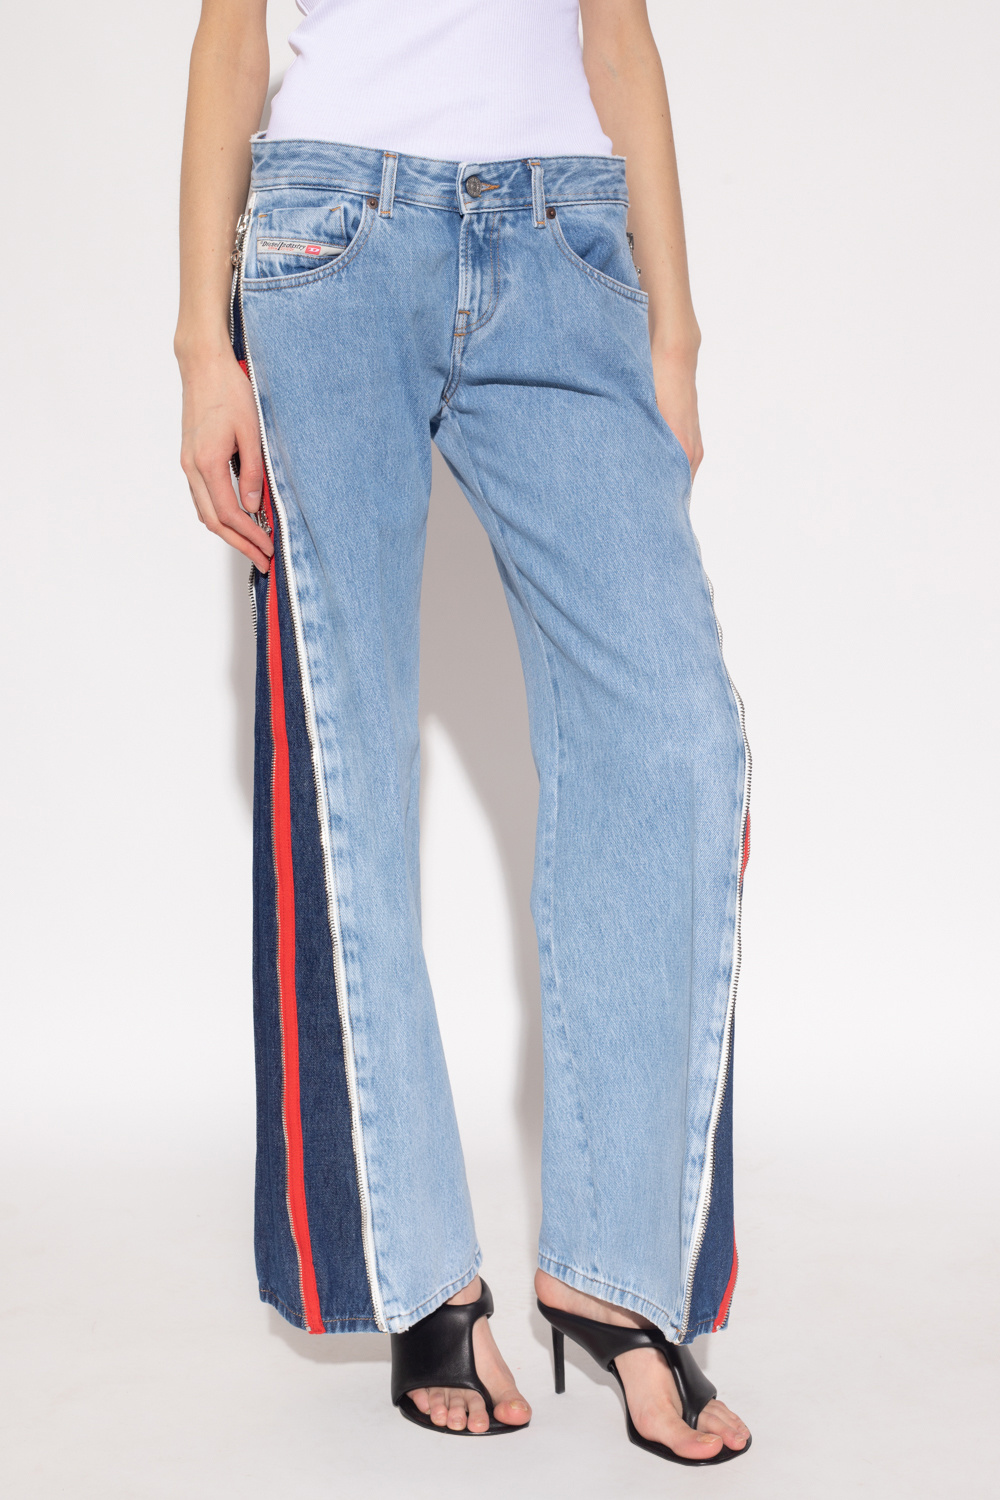 Diesel ‘2002’ jeans with side stripes